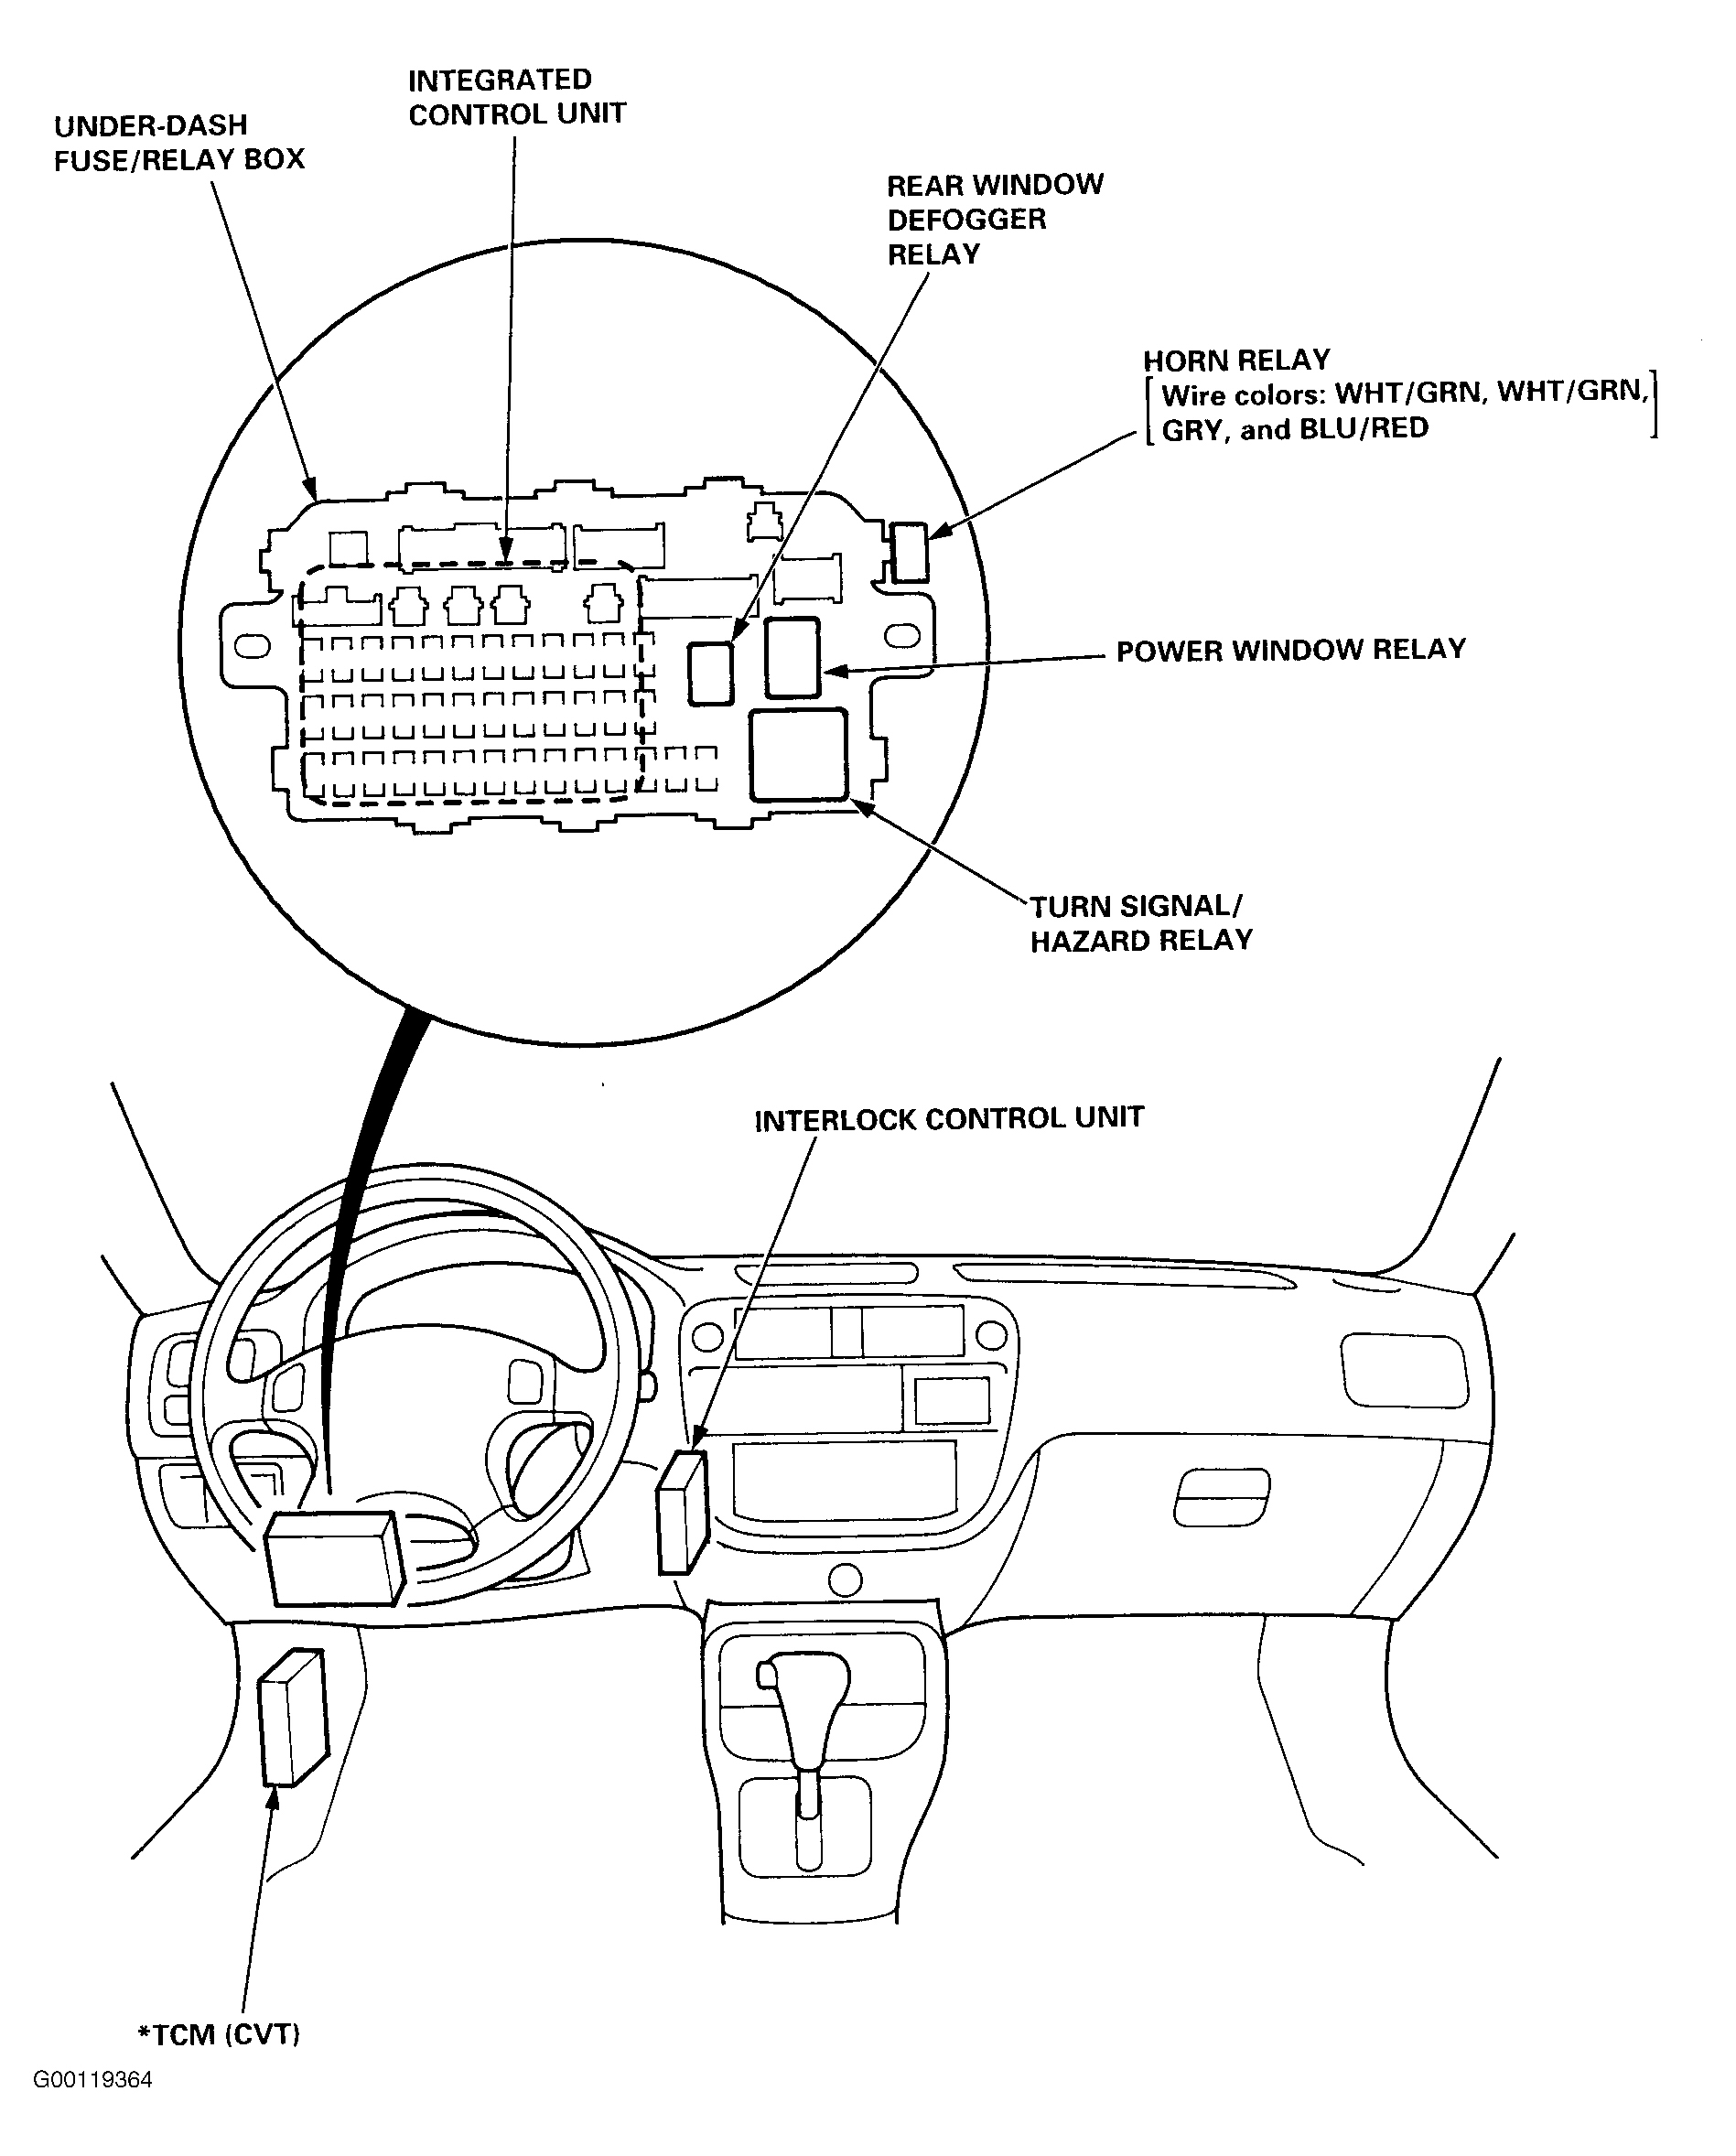 Honda Civic GX 1998 - Component Locations -  Locating Under-Dash Fuse/Relay Box (1996-97)